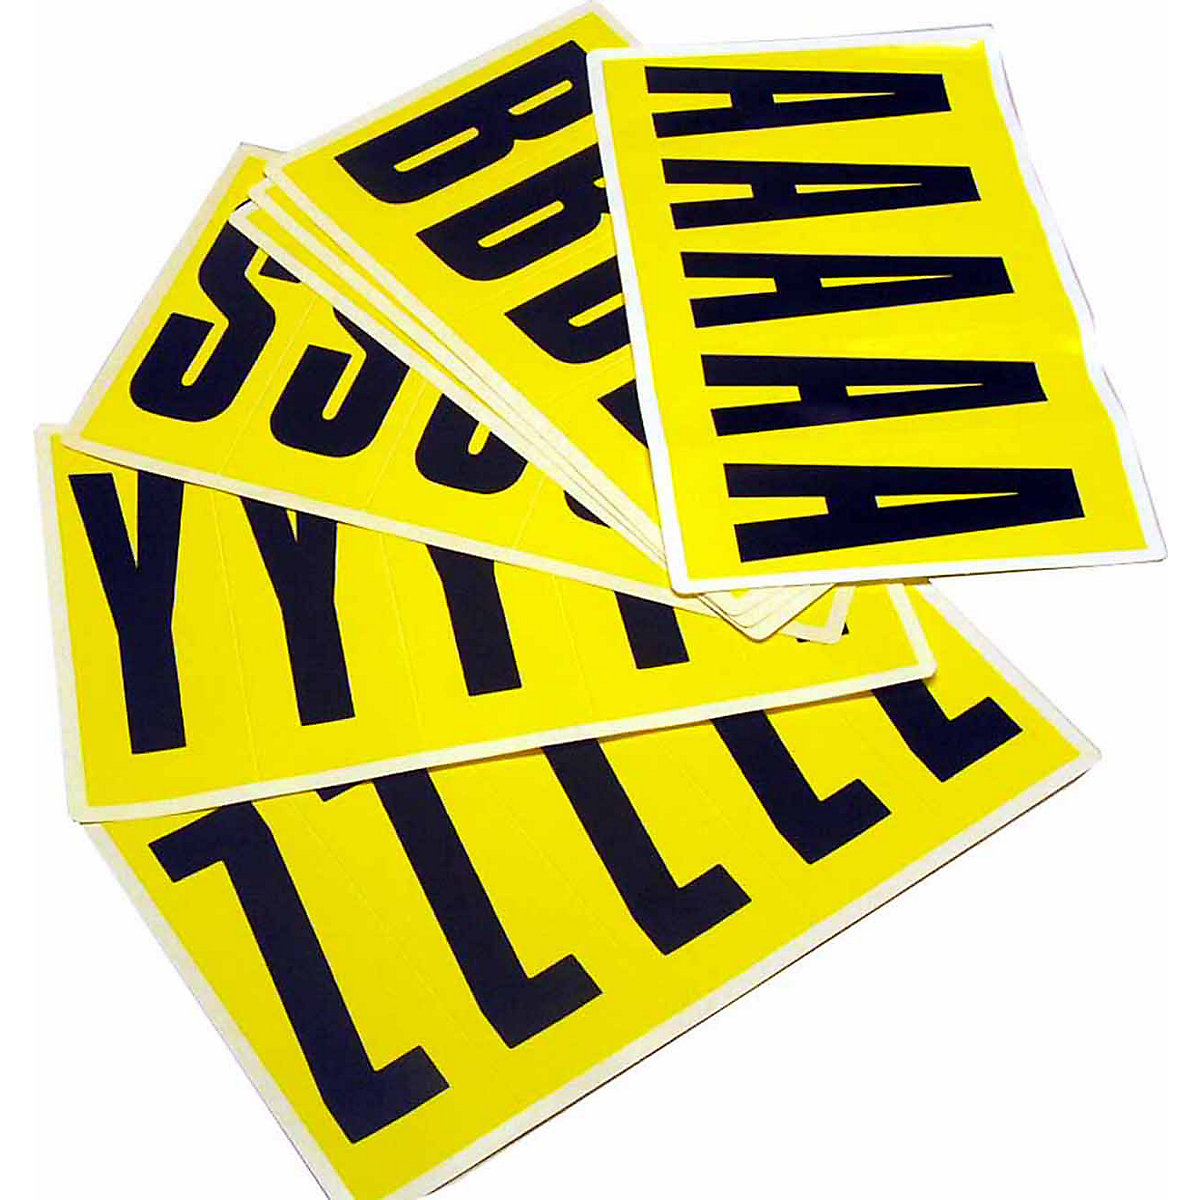 Conjunto de caracteres, AxL 130 x 45 mm, letras autocolantes A – Z, 26 cartões-5